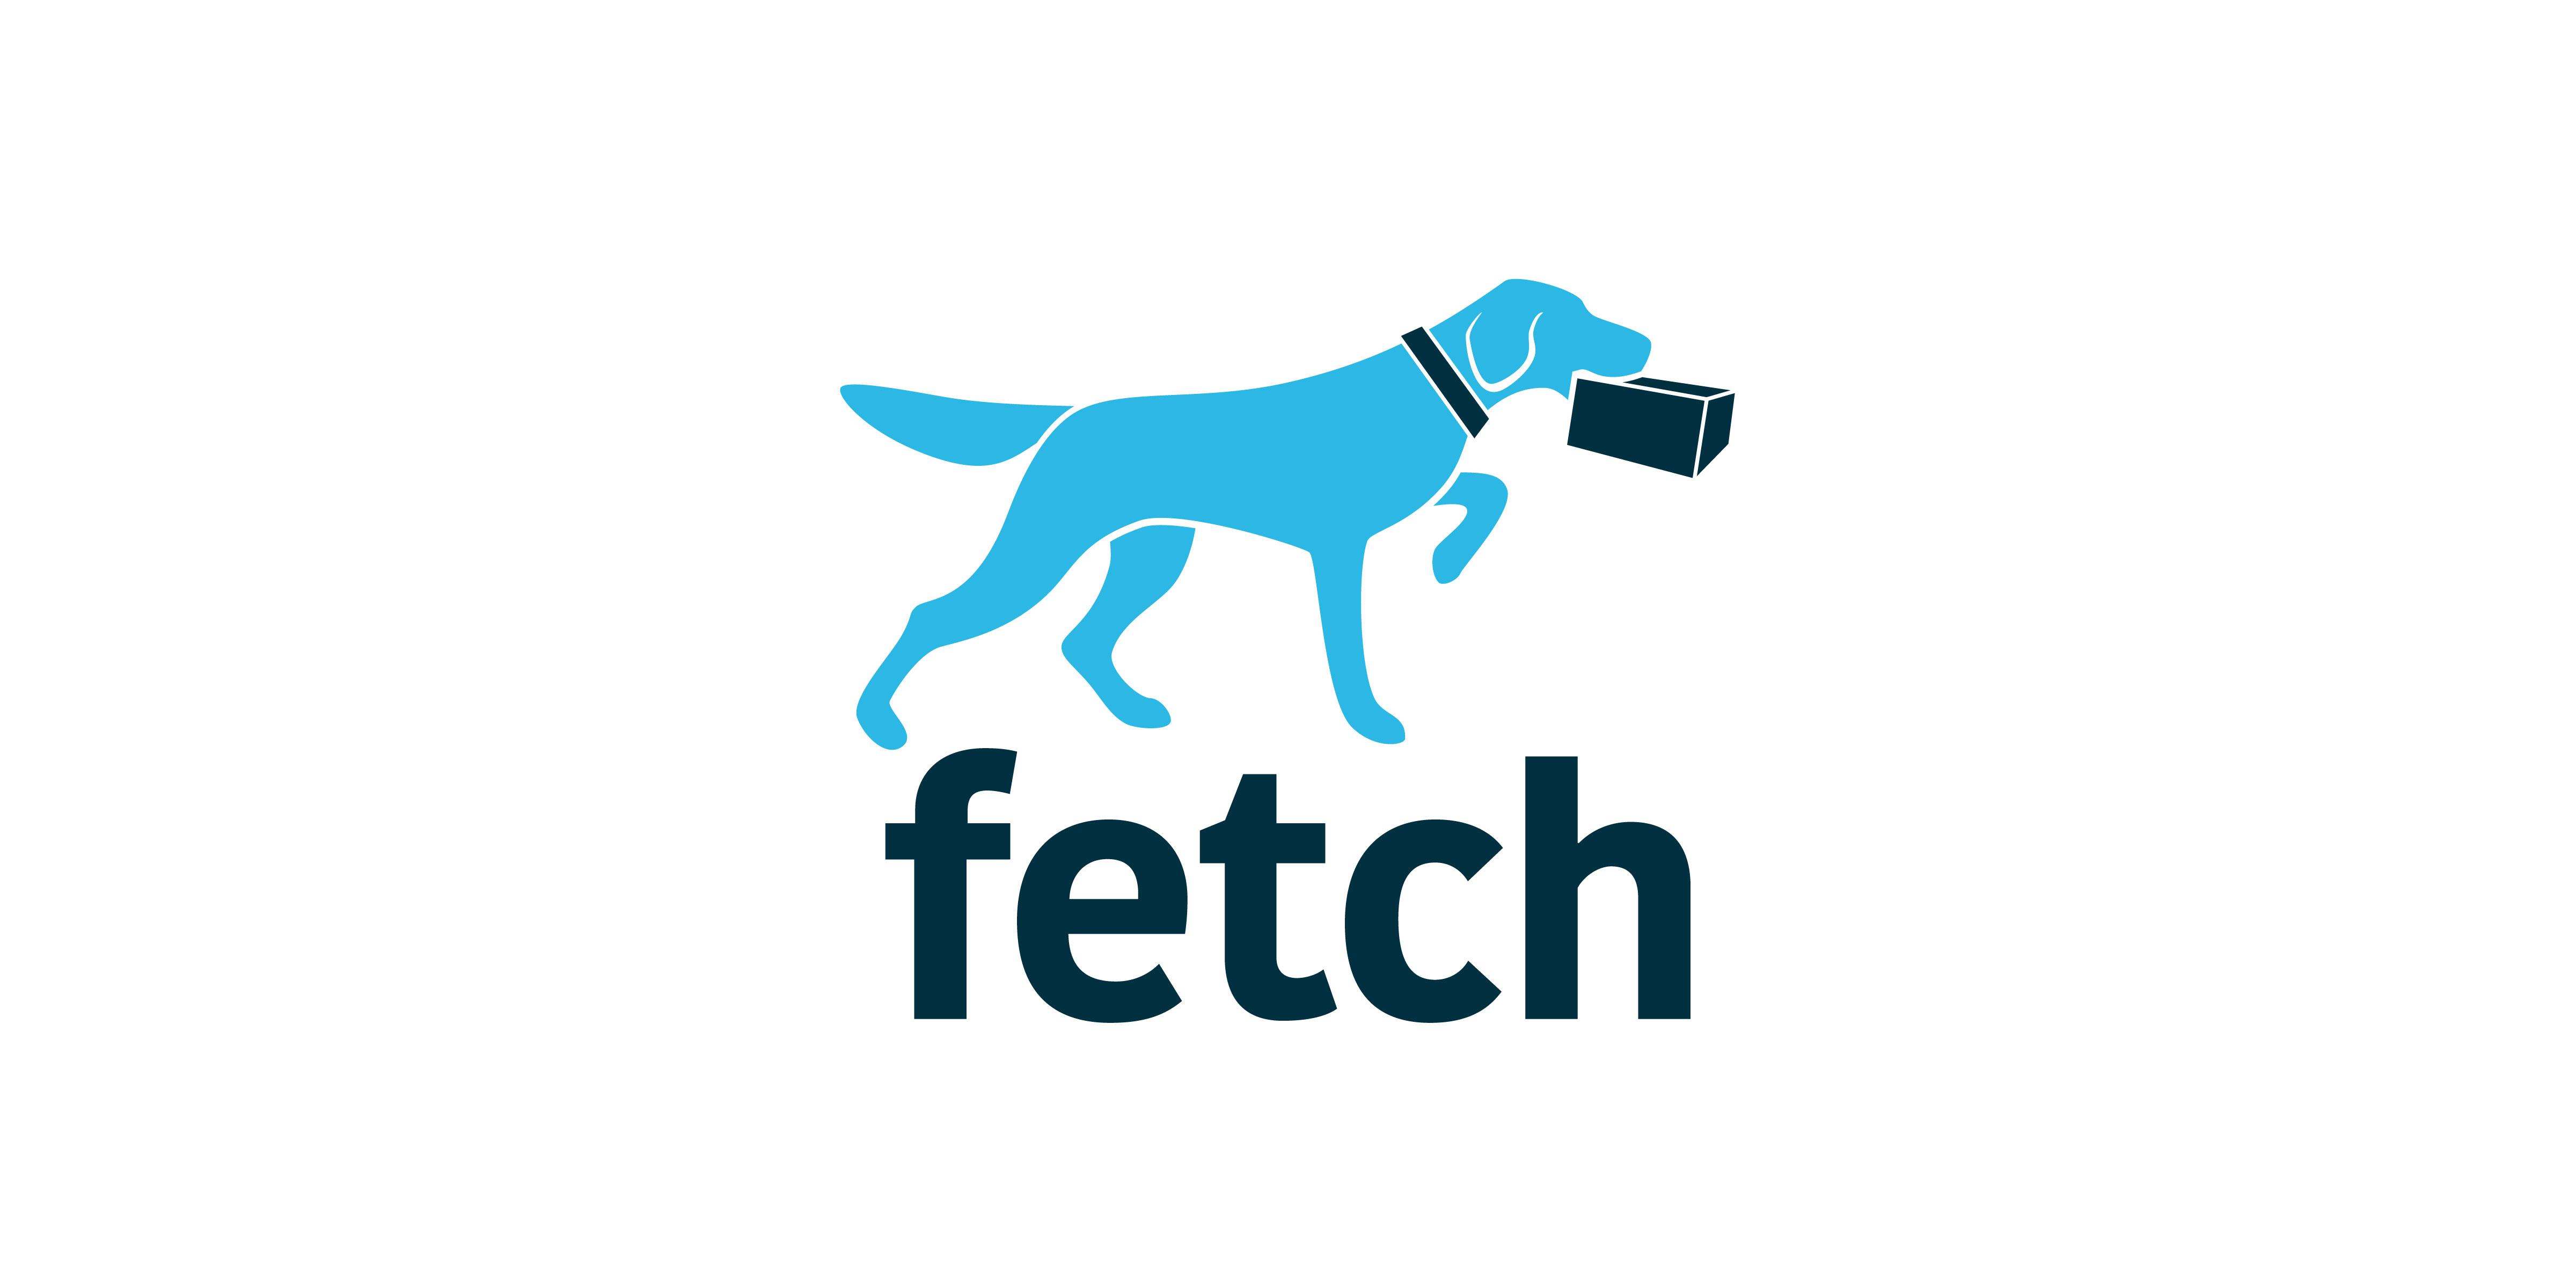 Import fetch. Fetch. To fetch. Fetch фото. Fetch deliver.